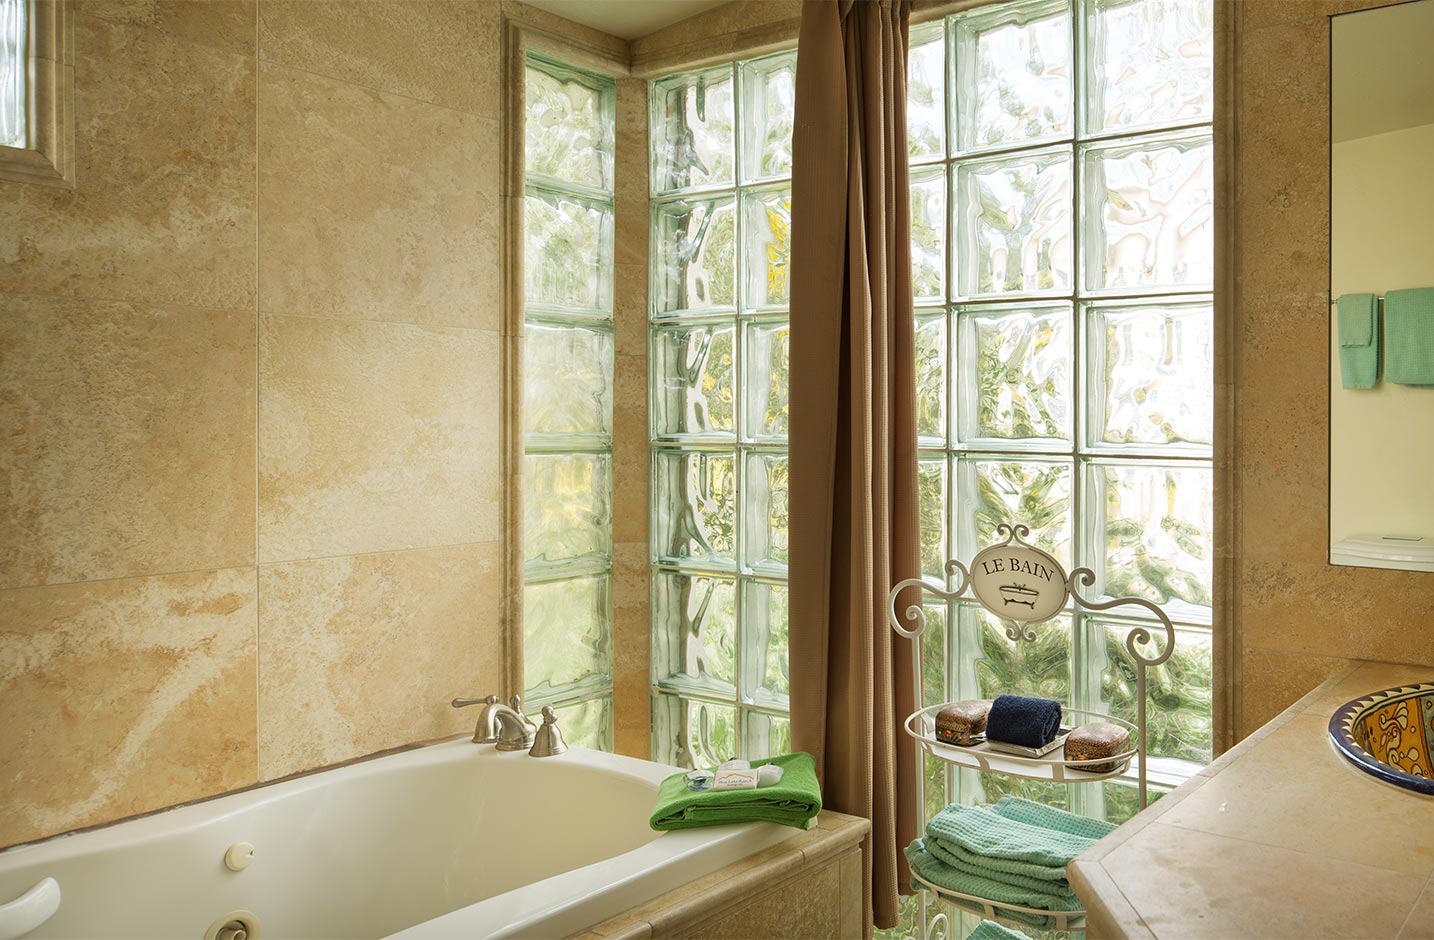 A bathroom with glass tile and a large bath tub